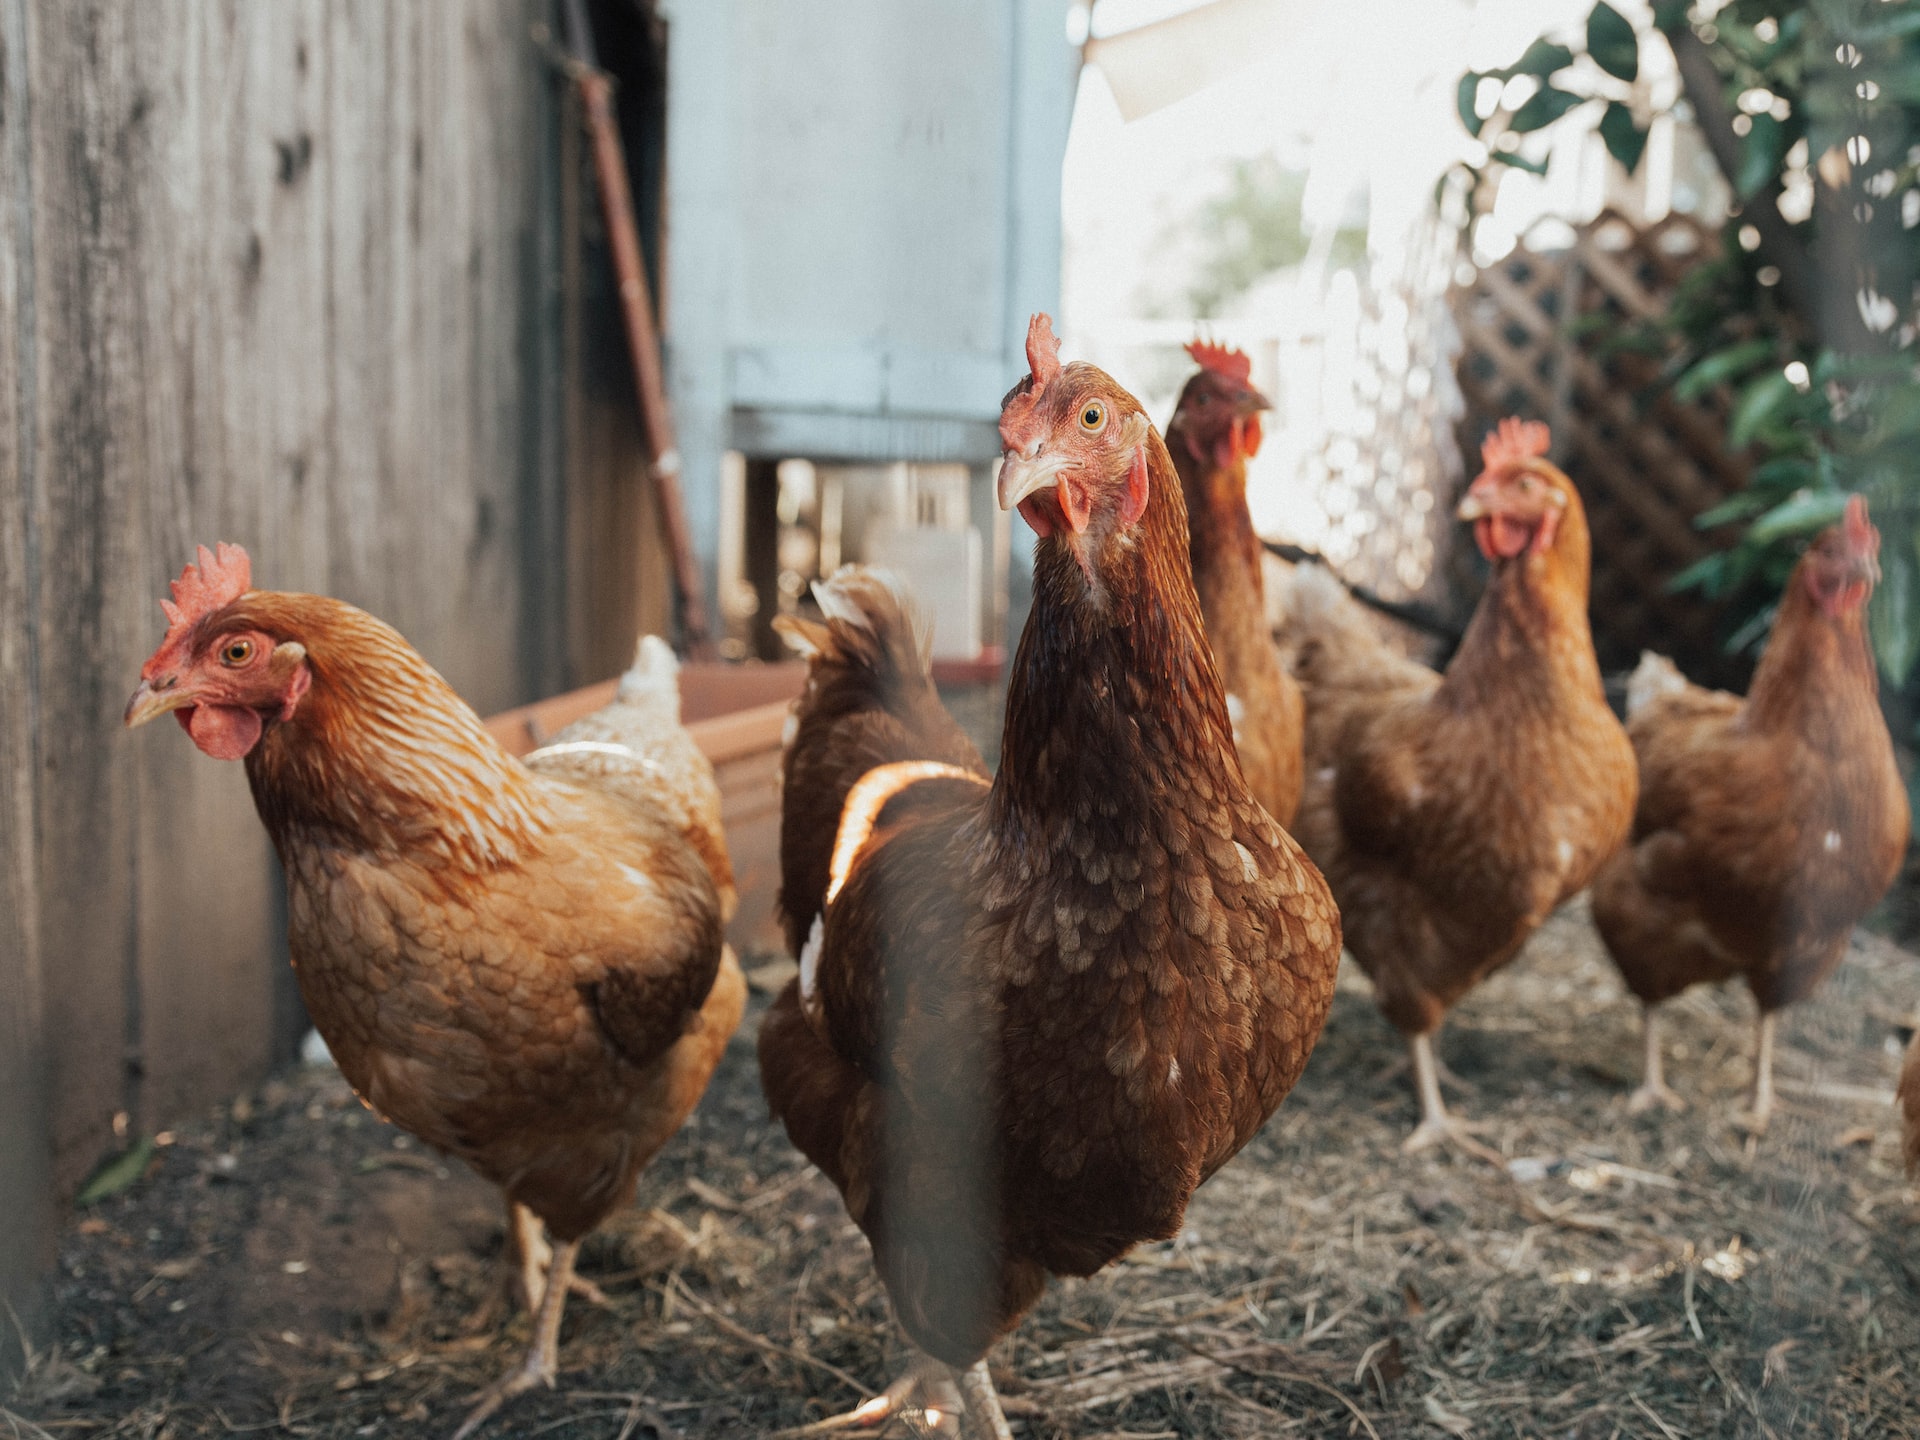 Is avian influenza a threat to Aotearoa? – Expert Reaction